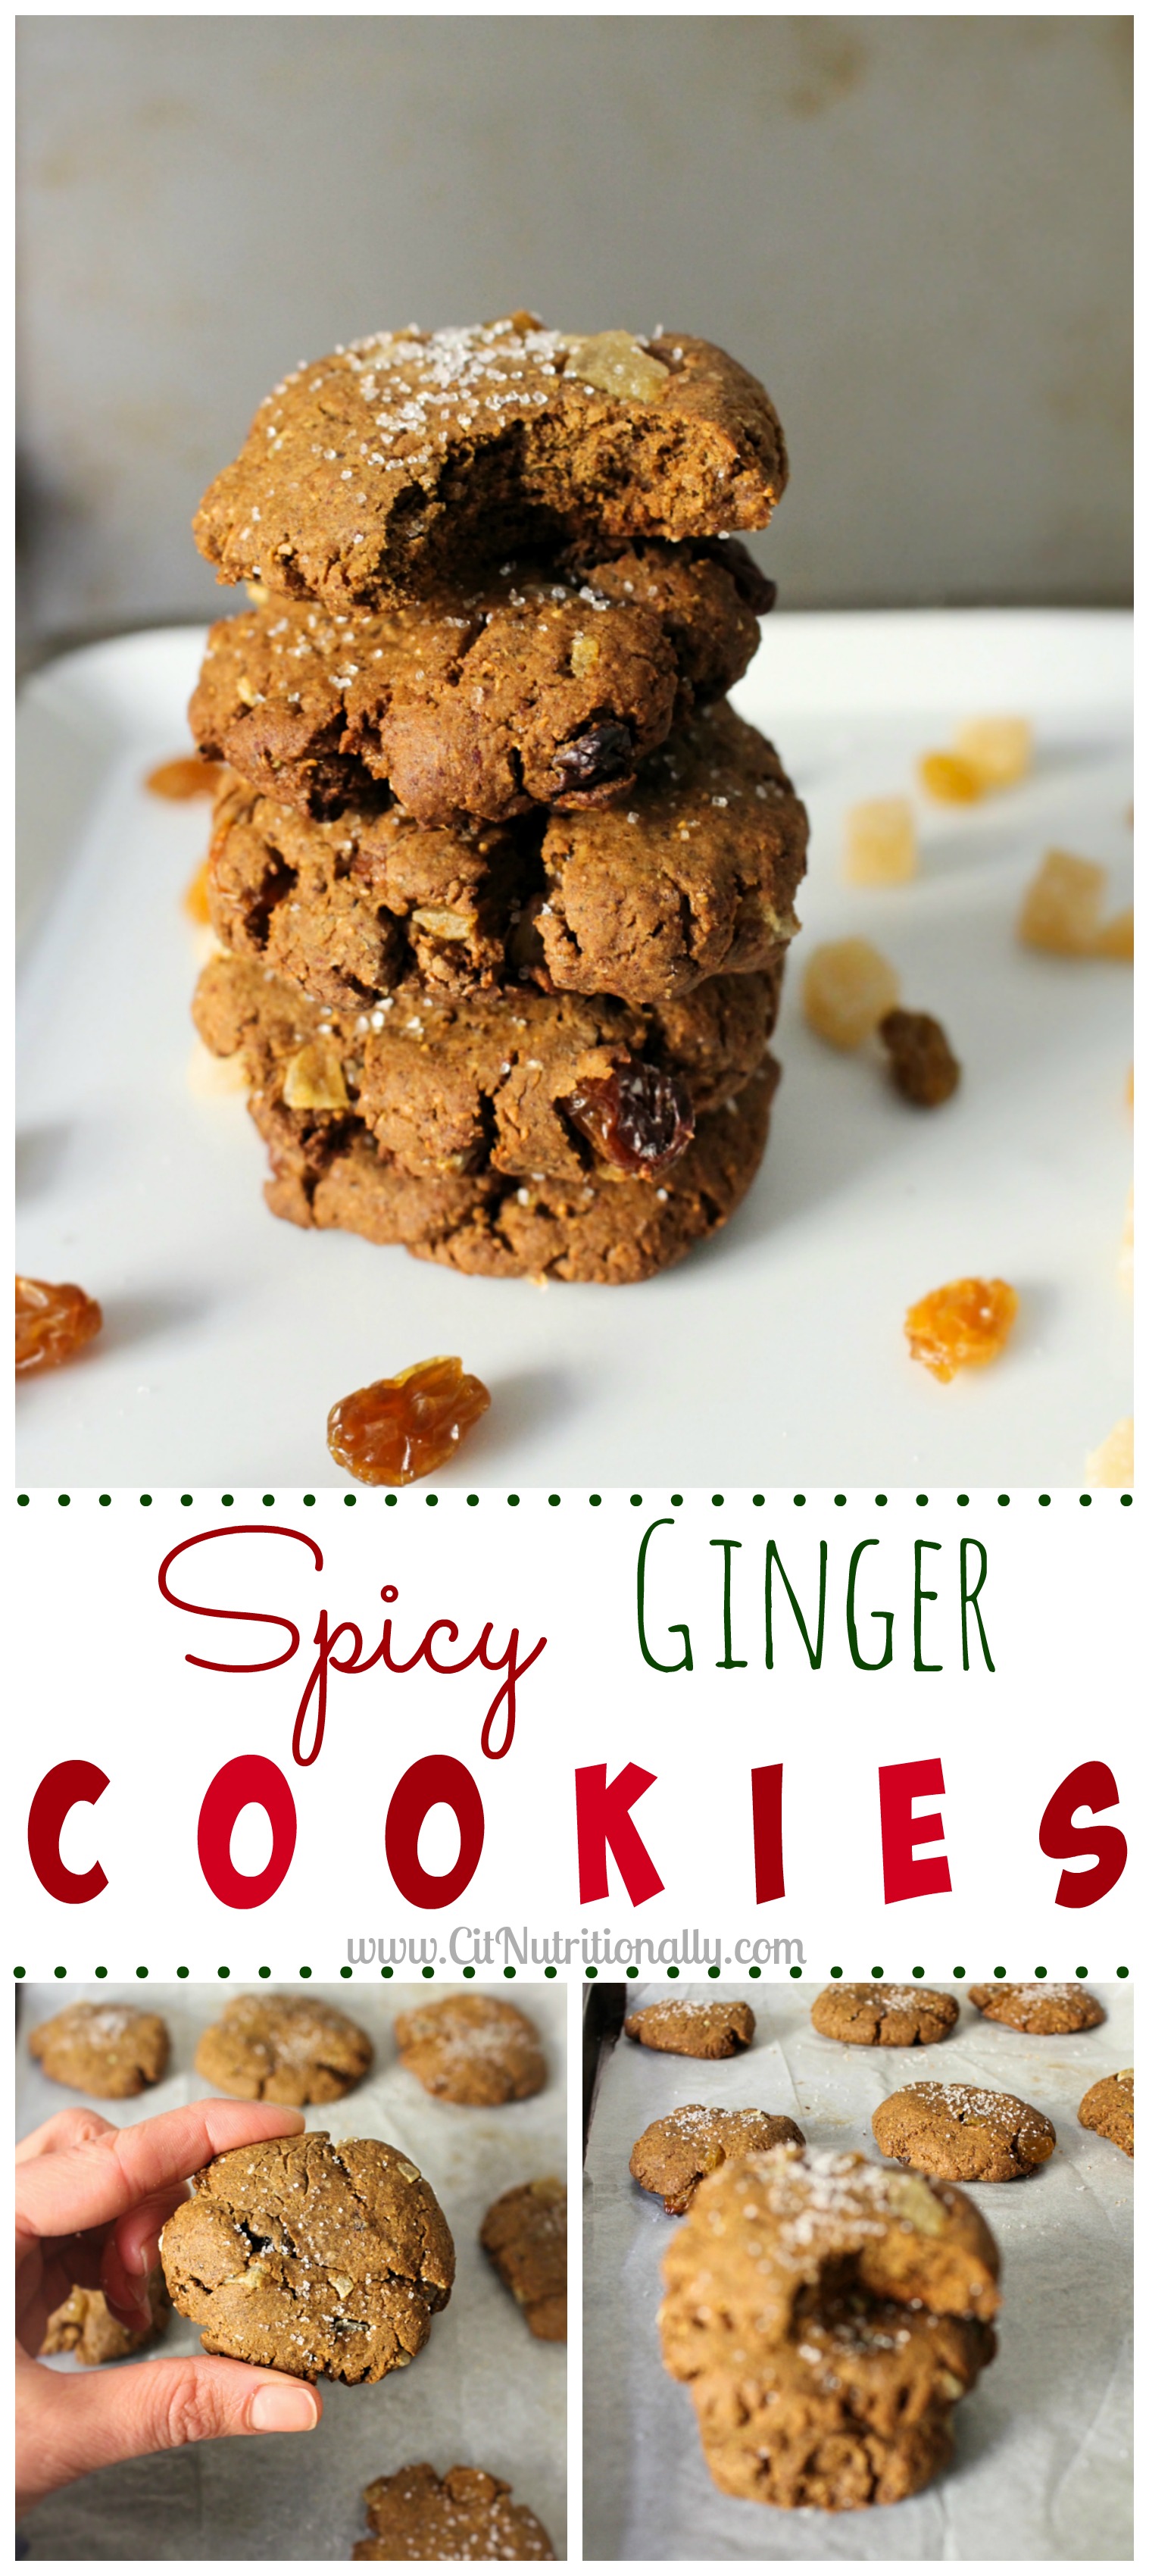 Spicy Ginger Cookies | C it Nutritionally #vegan option #nutfree #peanutfree #eggfree #dairyfree #soyfree #Christmas #dessert #baking